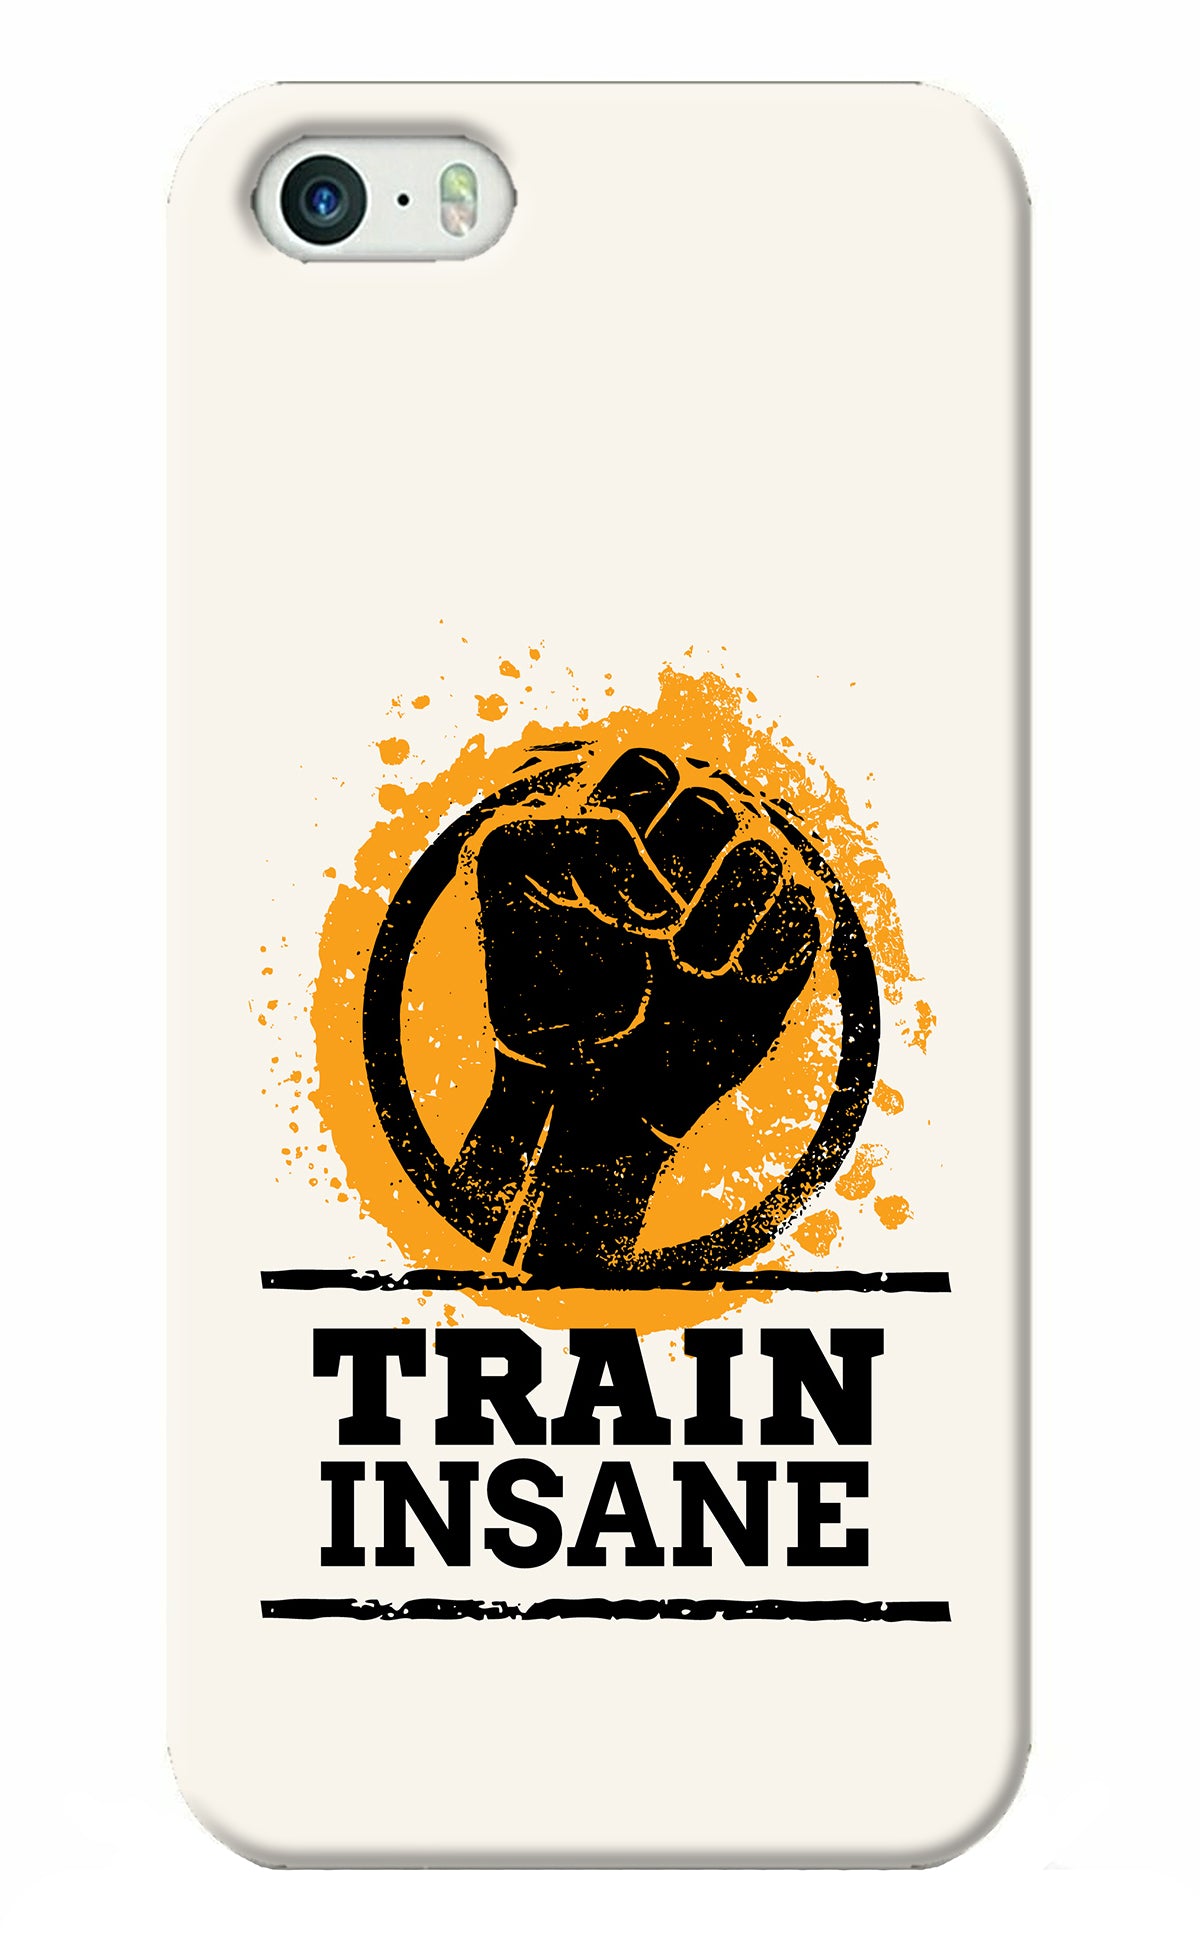 Train Insane iPhone 5/5s Back Cover